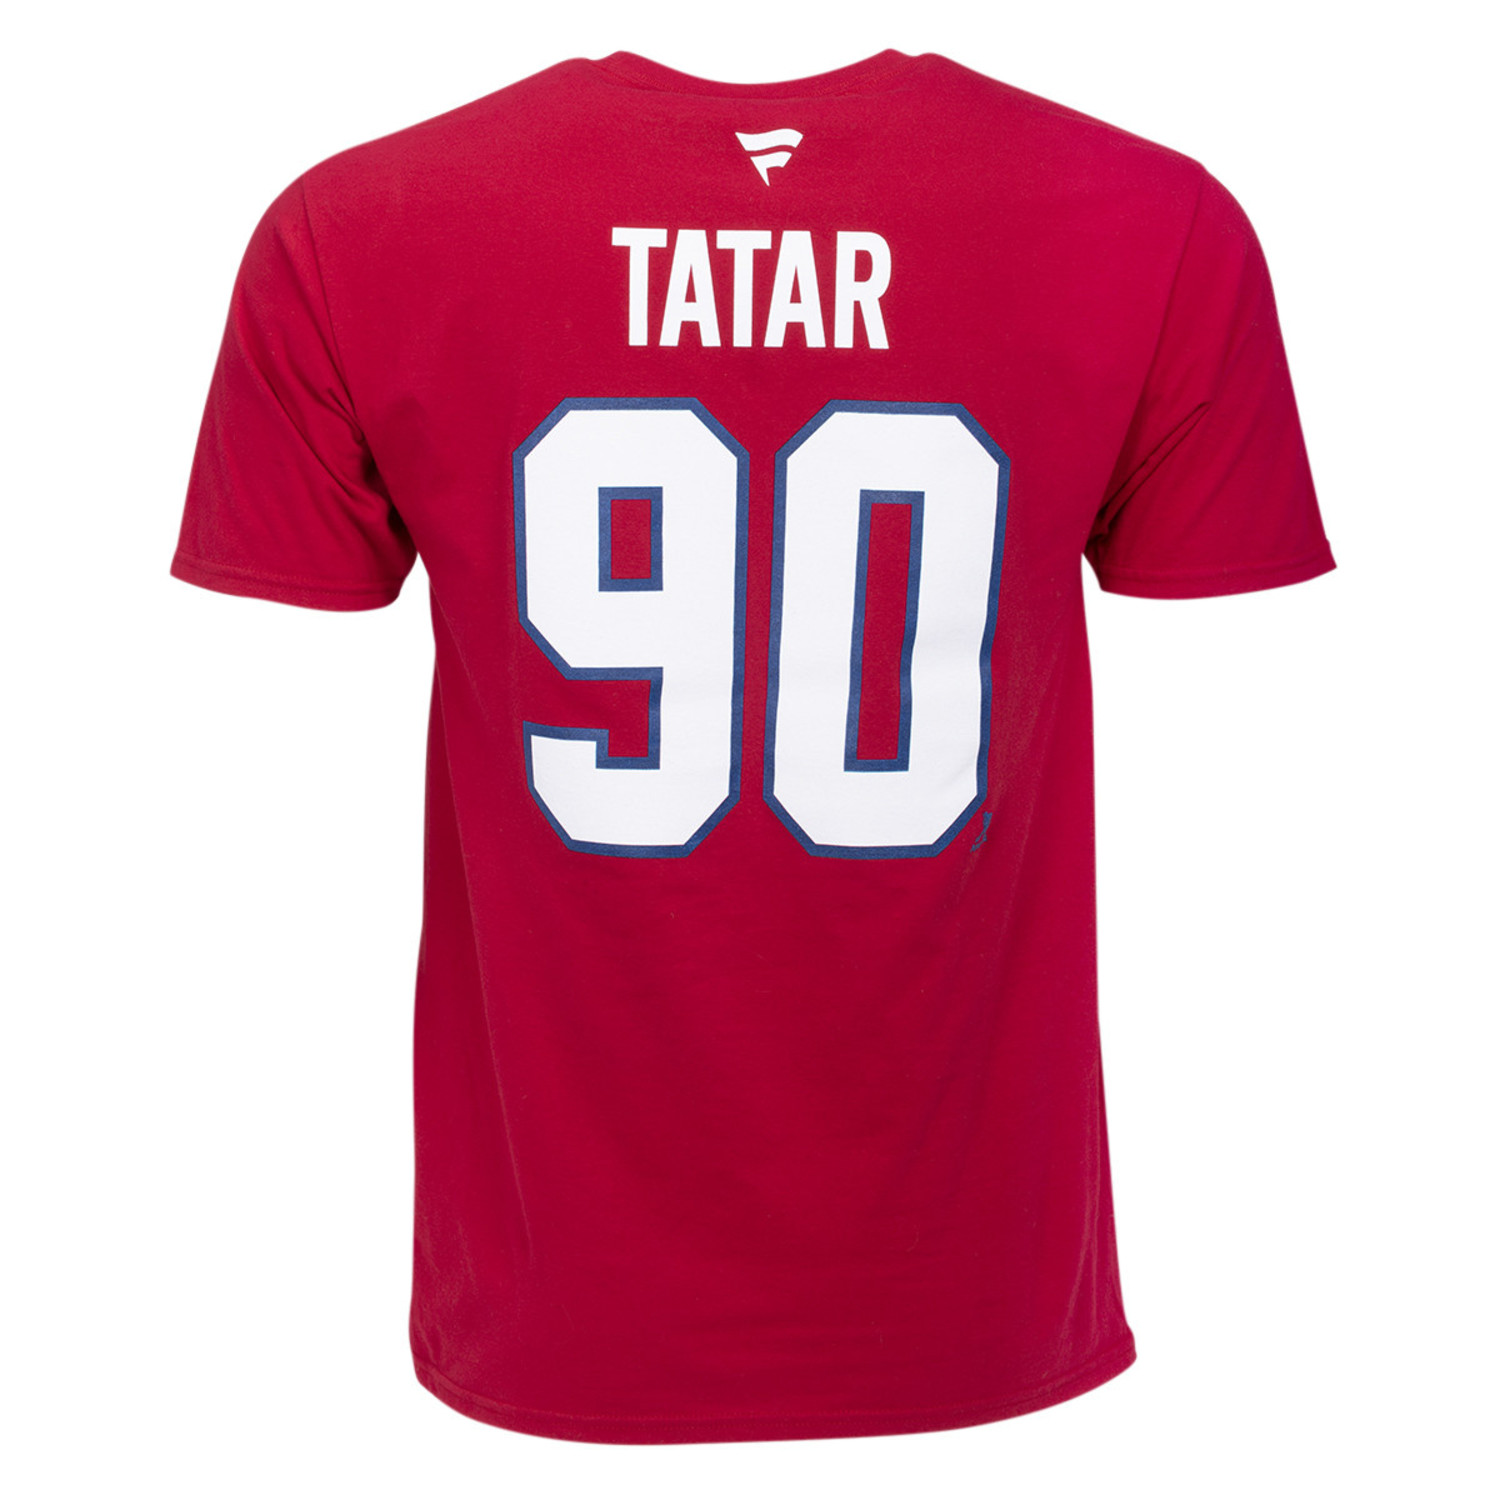 tomas tatar shirt off 63% - www 